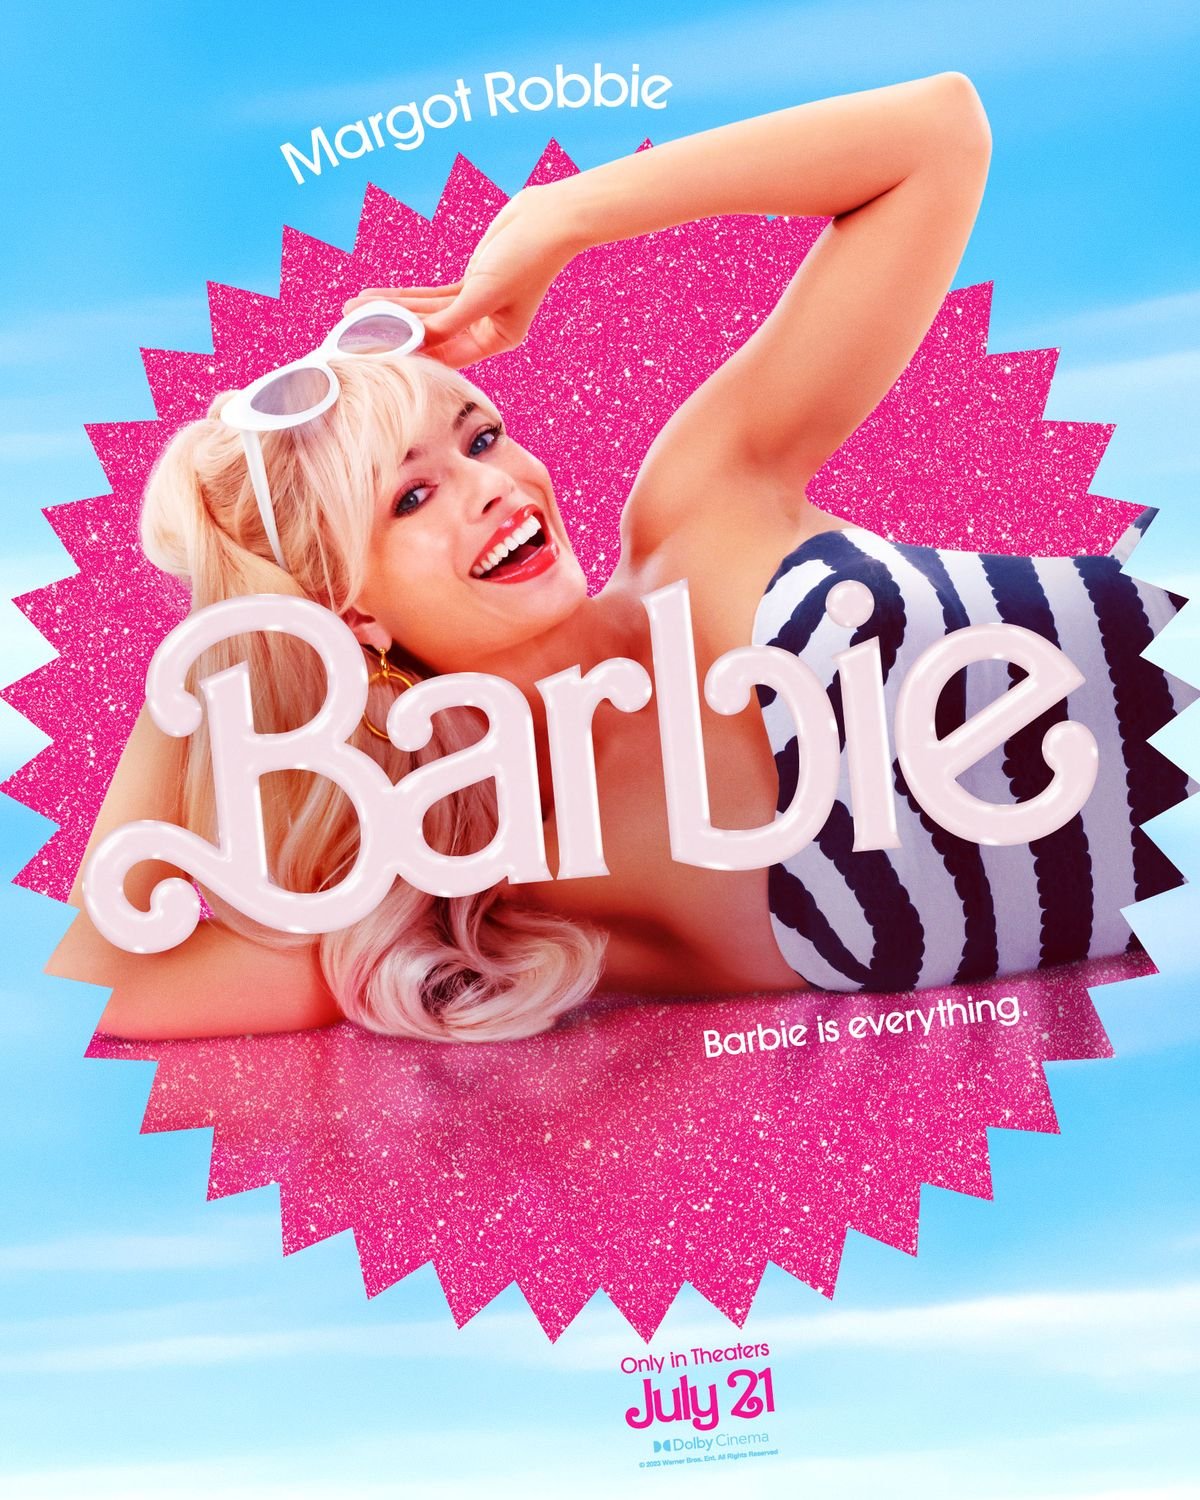 Barbie-Mania Hits Seattle! — Gossip & Glamour